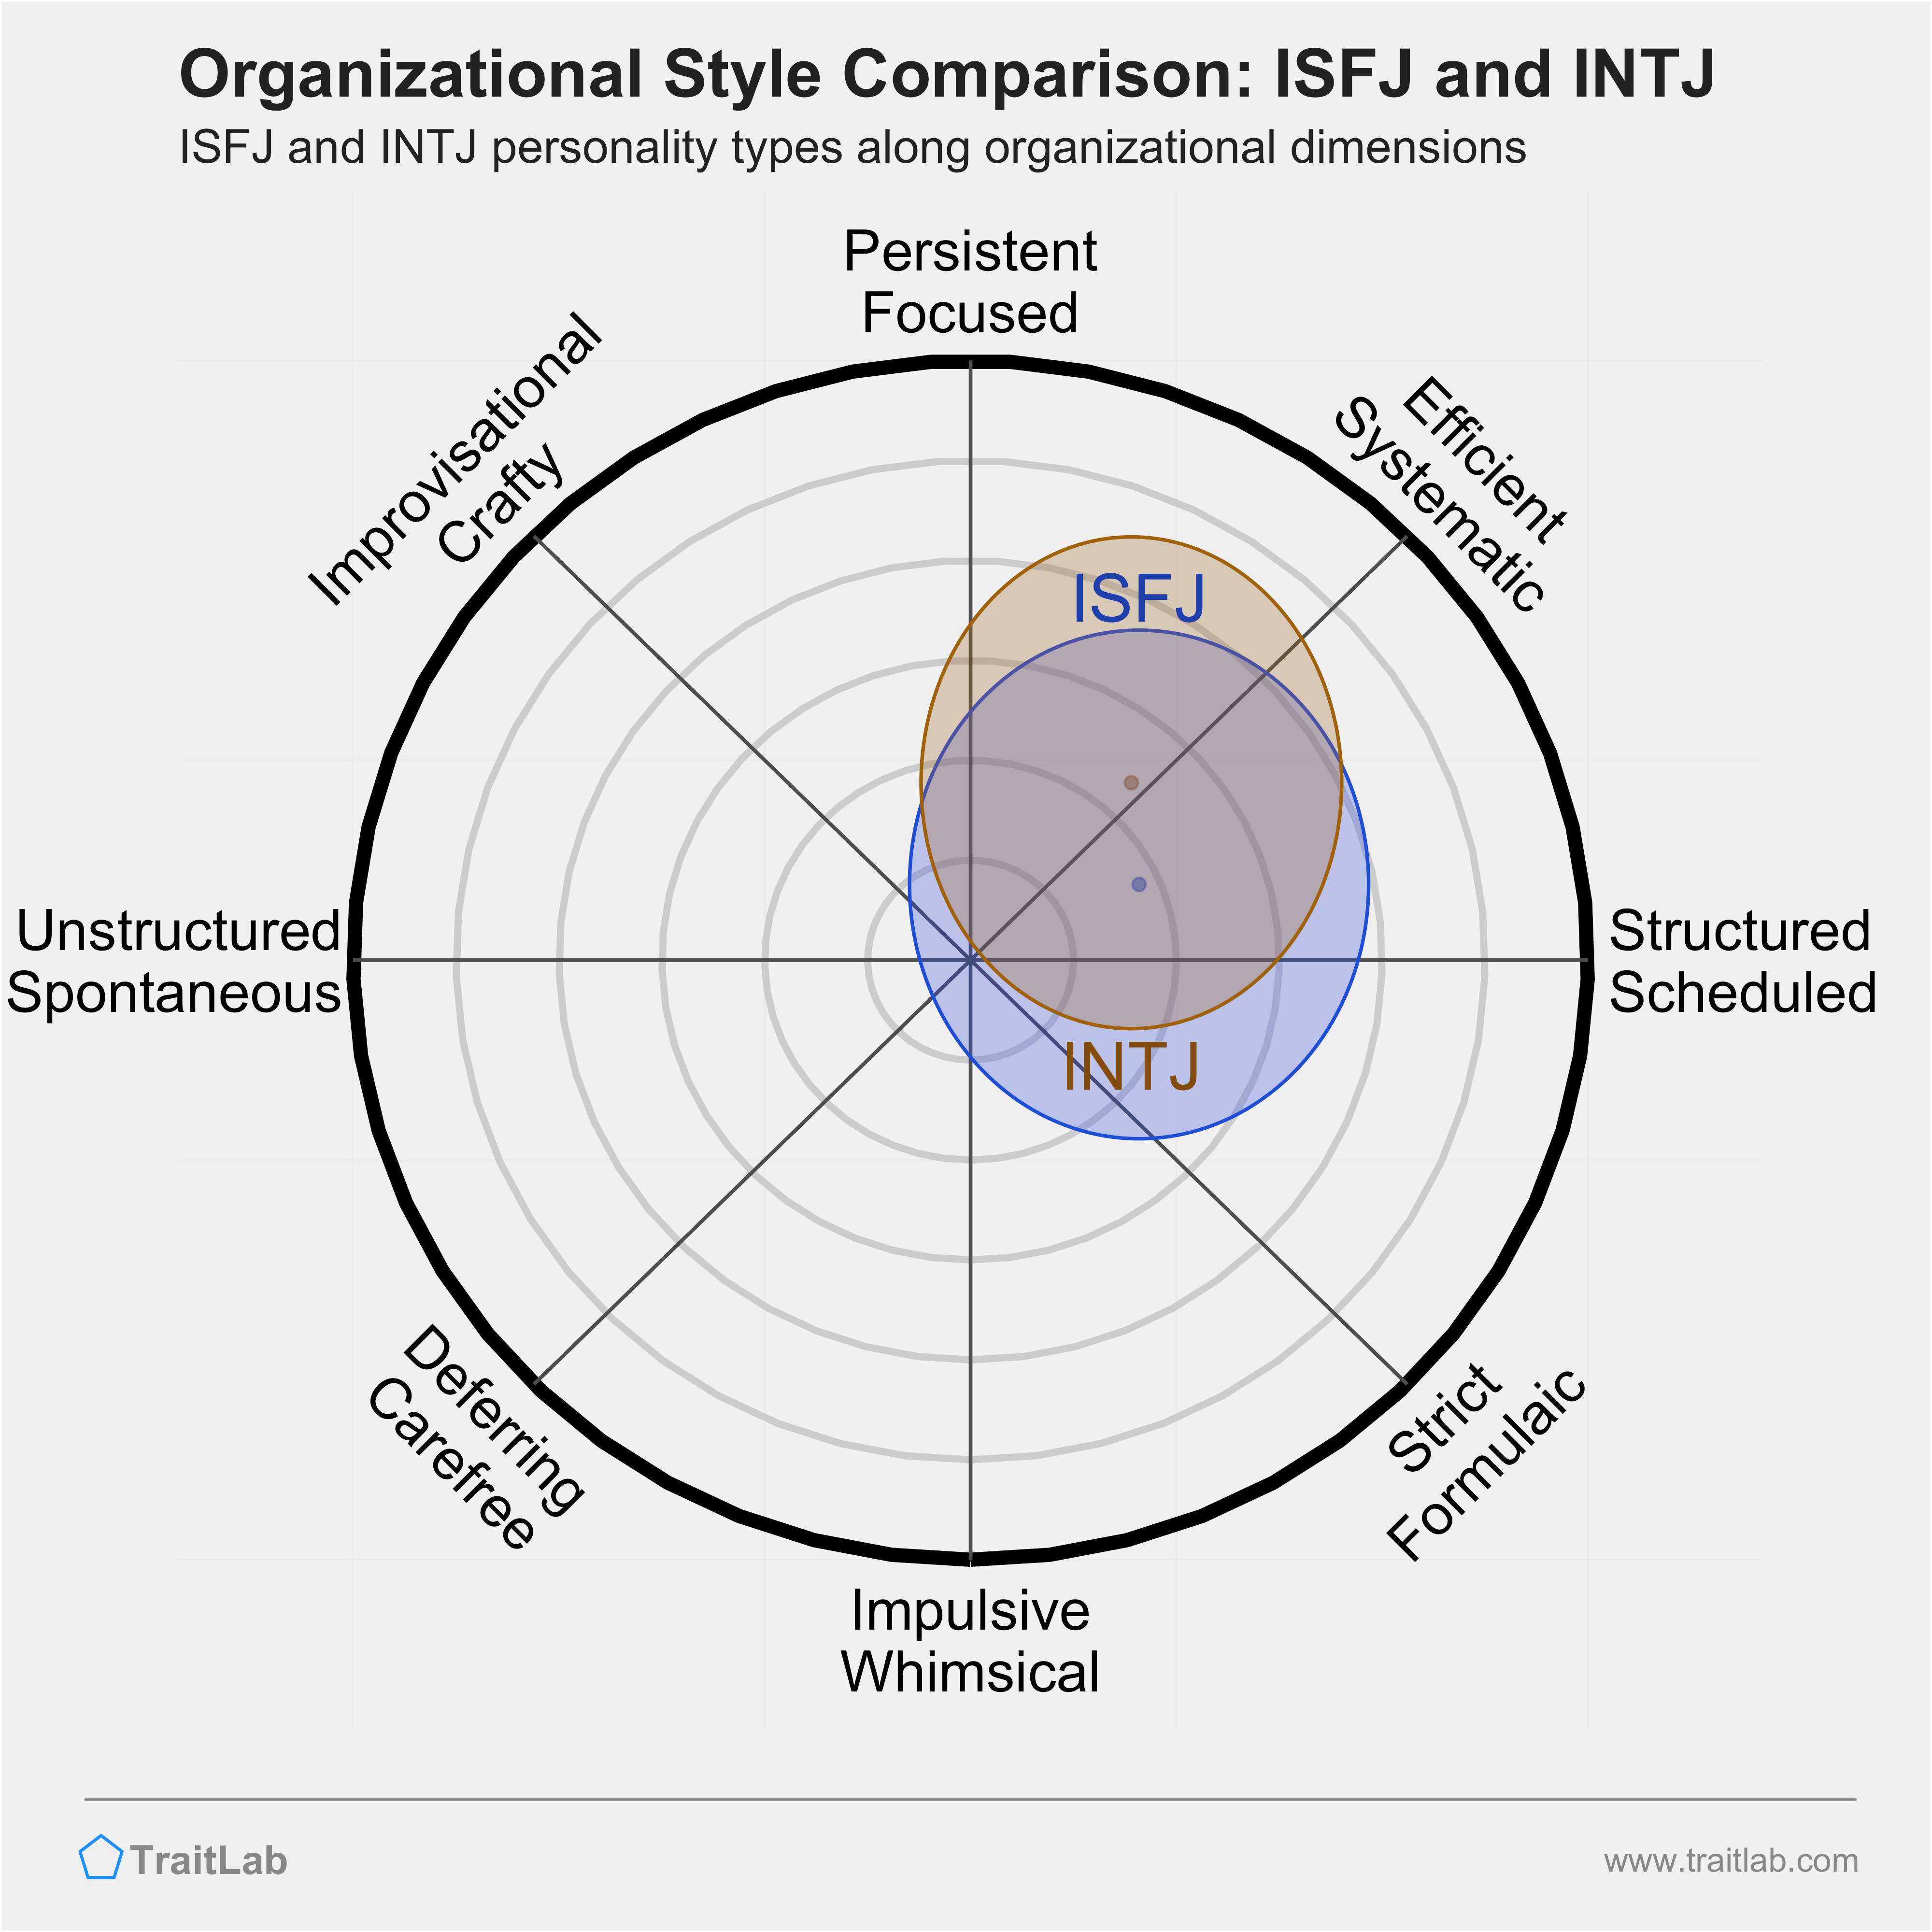 ISFJ and INTJ comparison across organizational dimensions